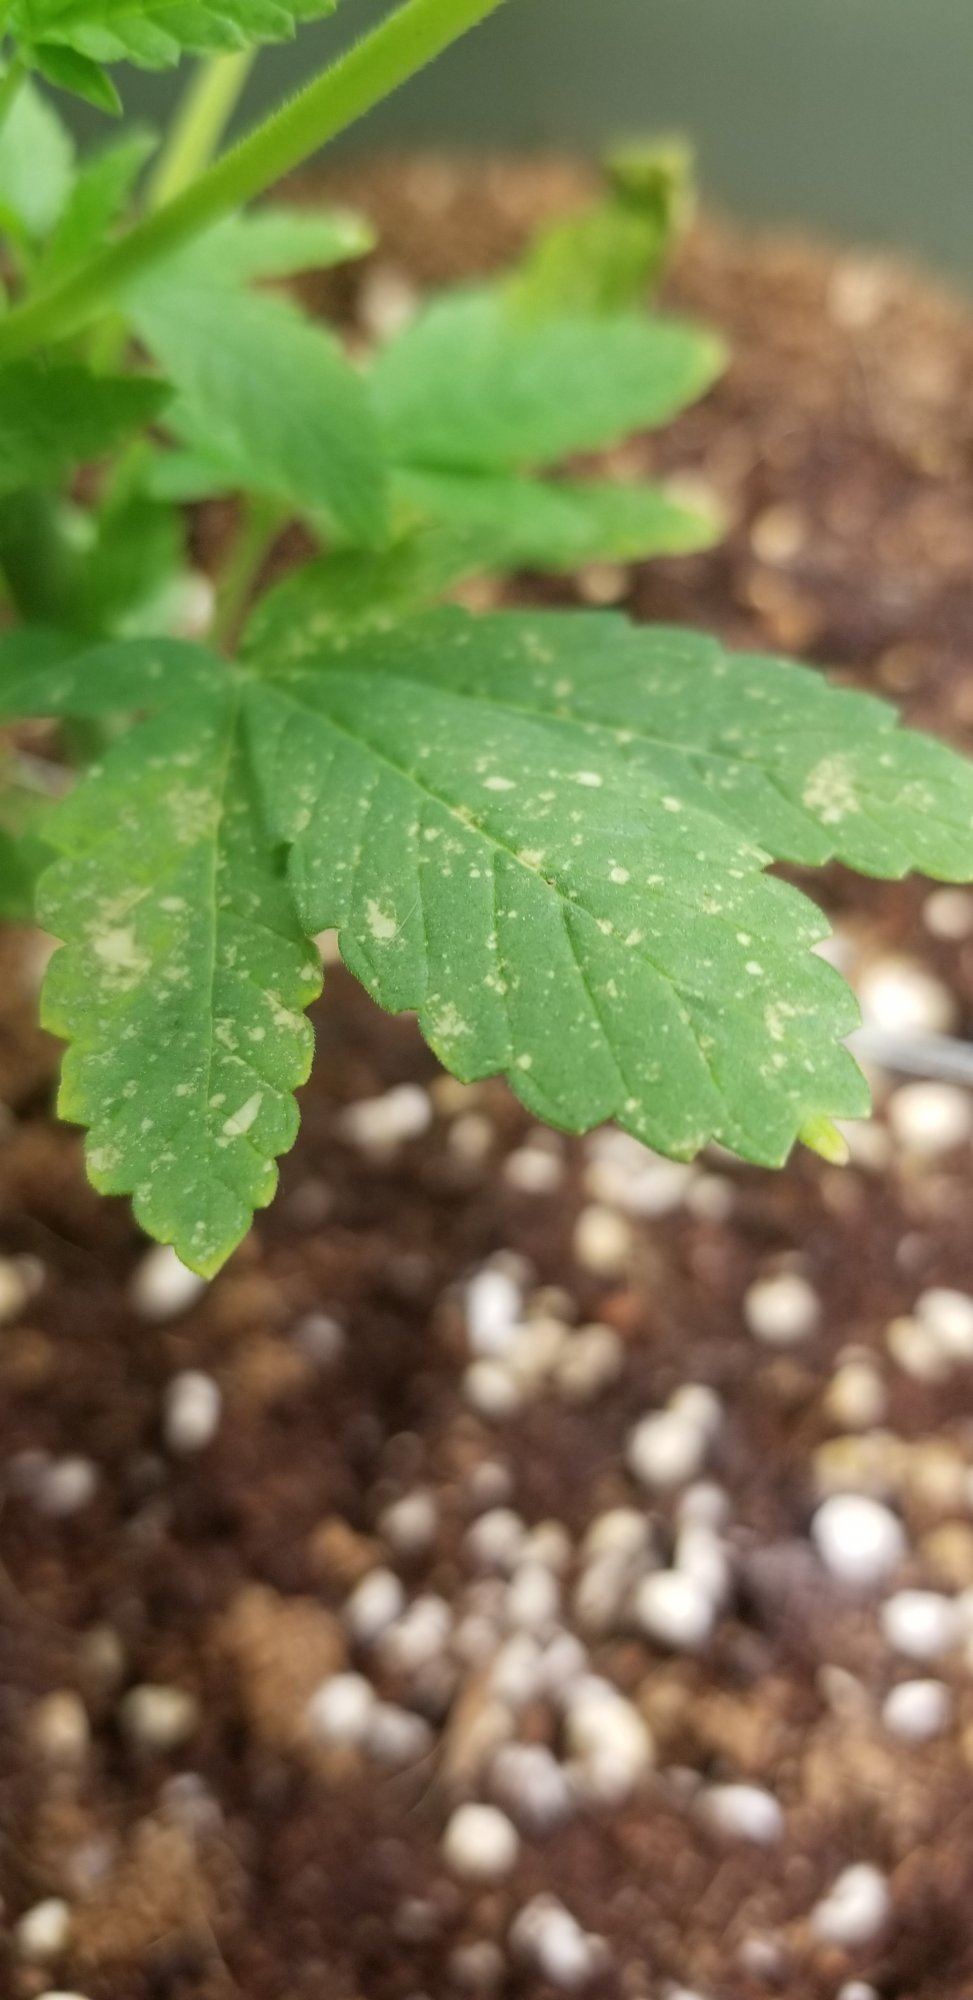 Strange spots on leaves